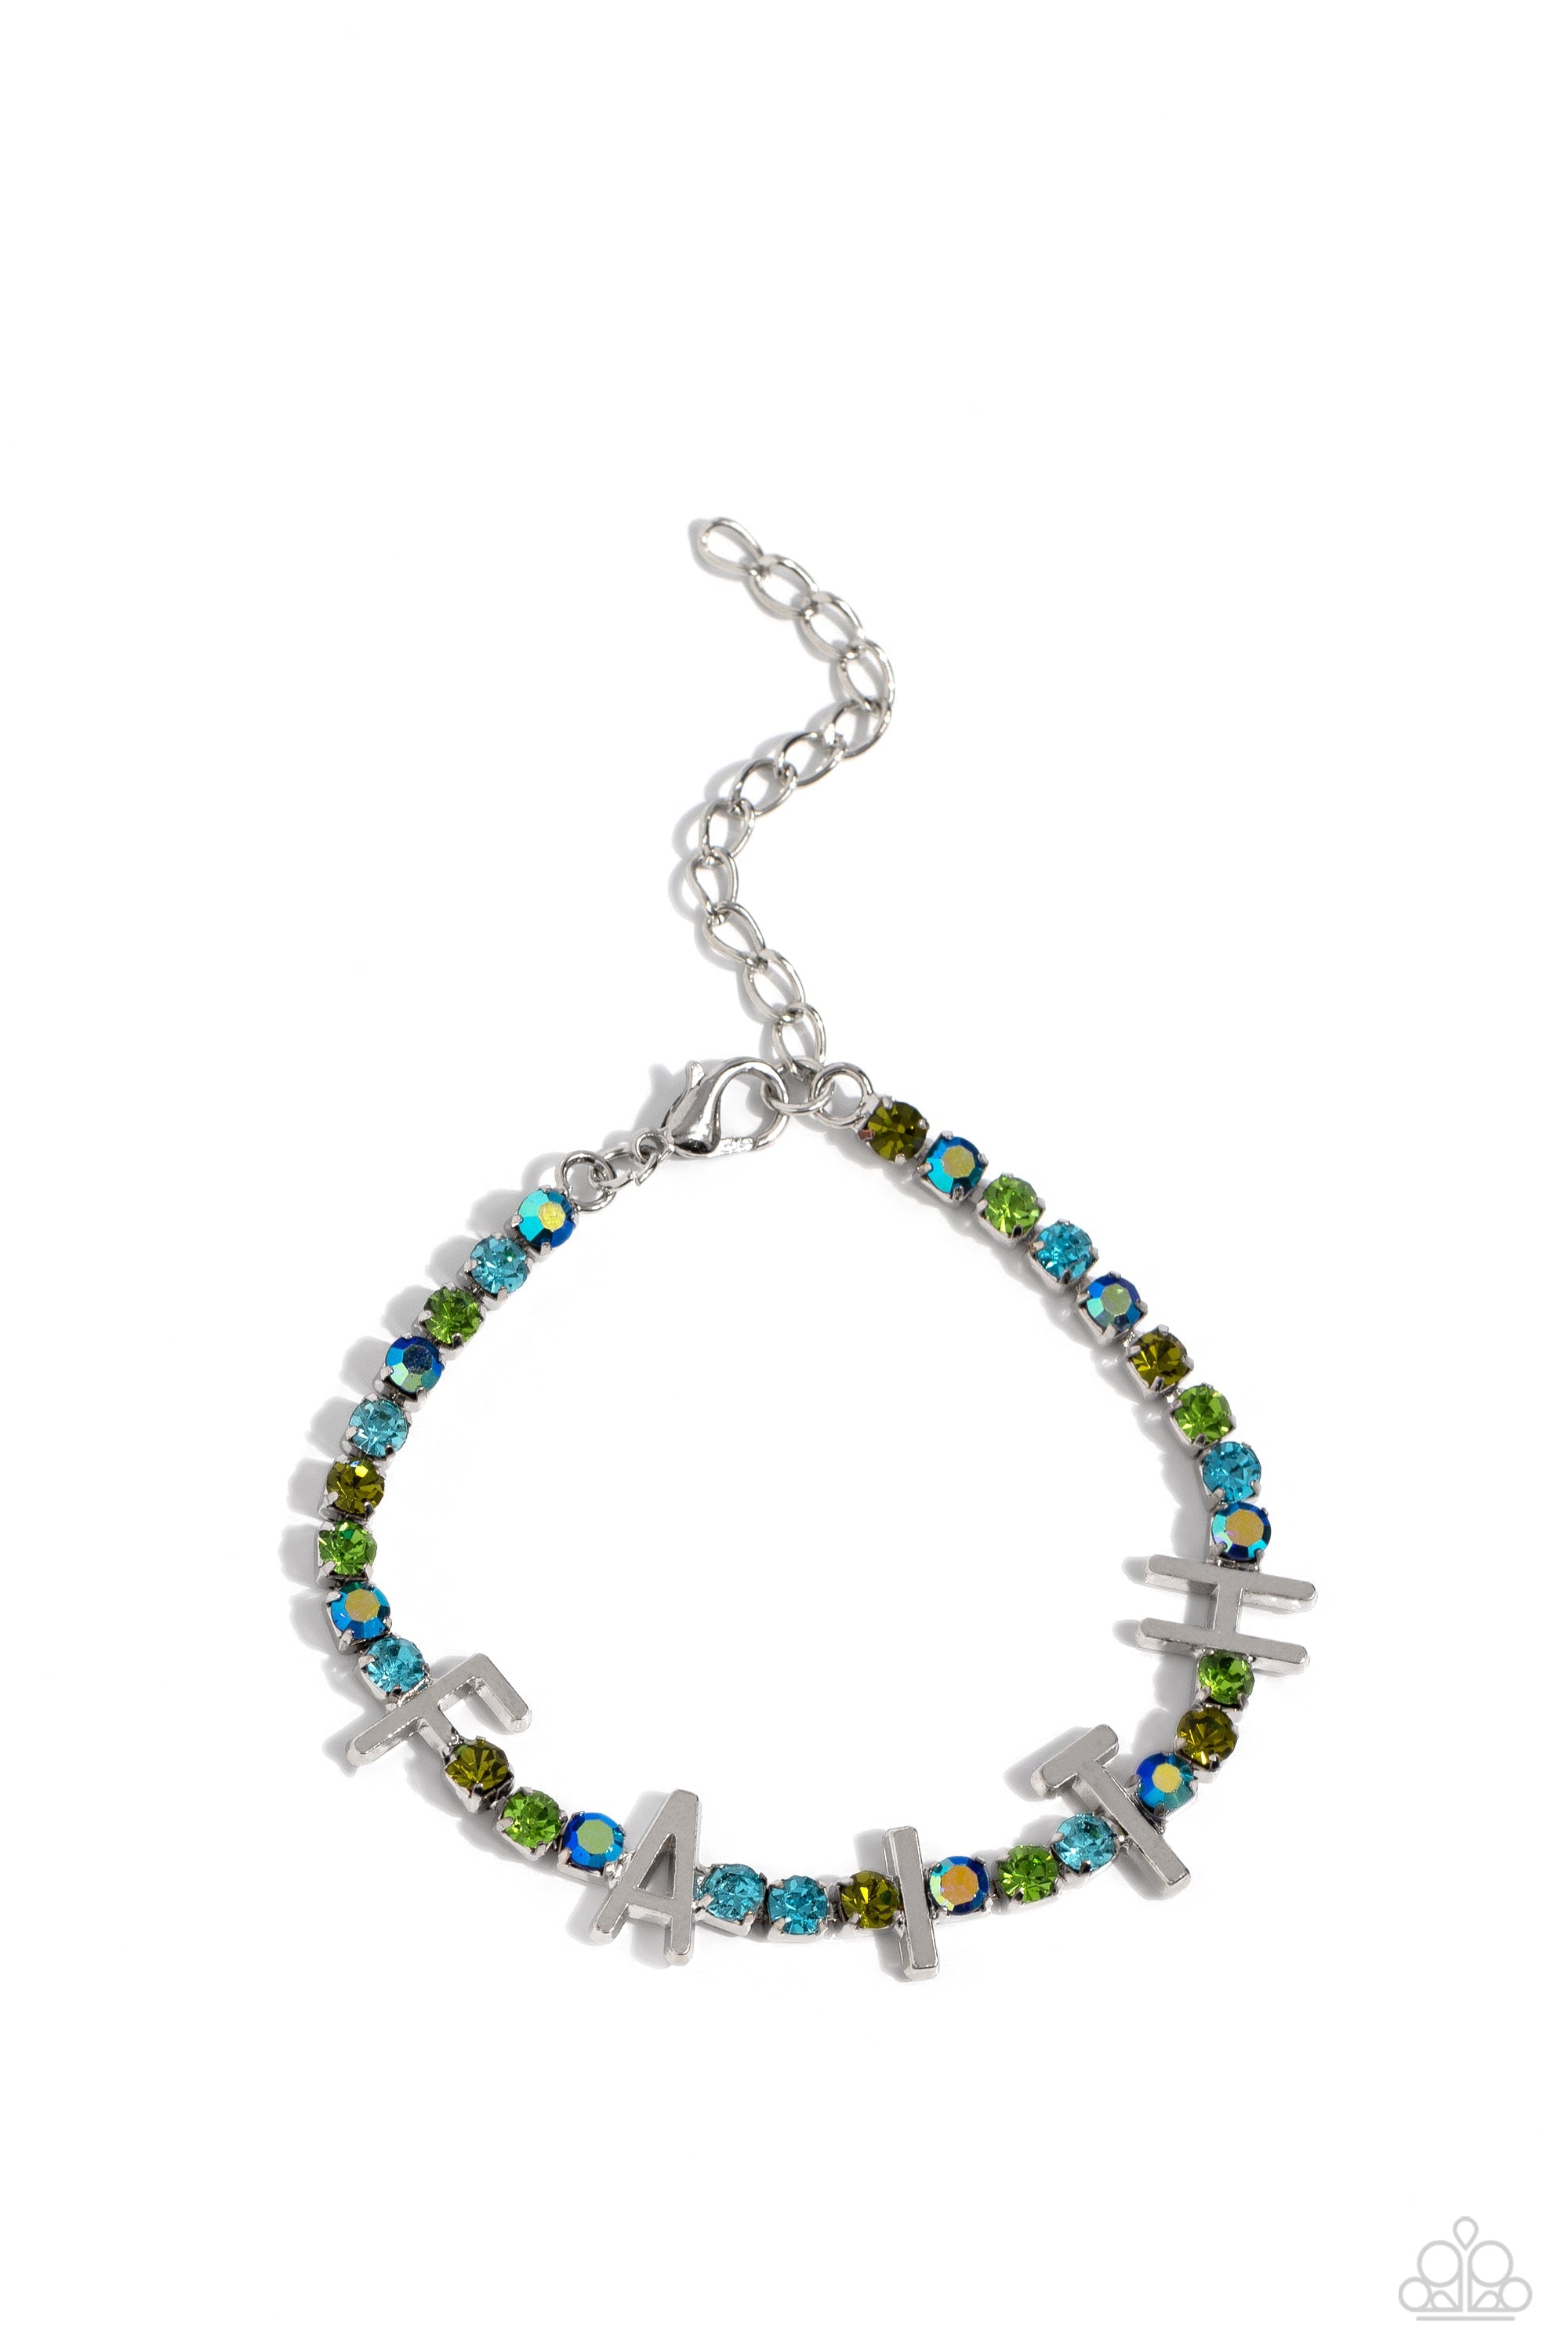 In Good Faith Multi Rhinestone Inspirational Bracelet - Paparazzi Accessories- lightbox - CarasShop.com - $5 Jewelry by Cara Jewels